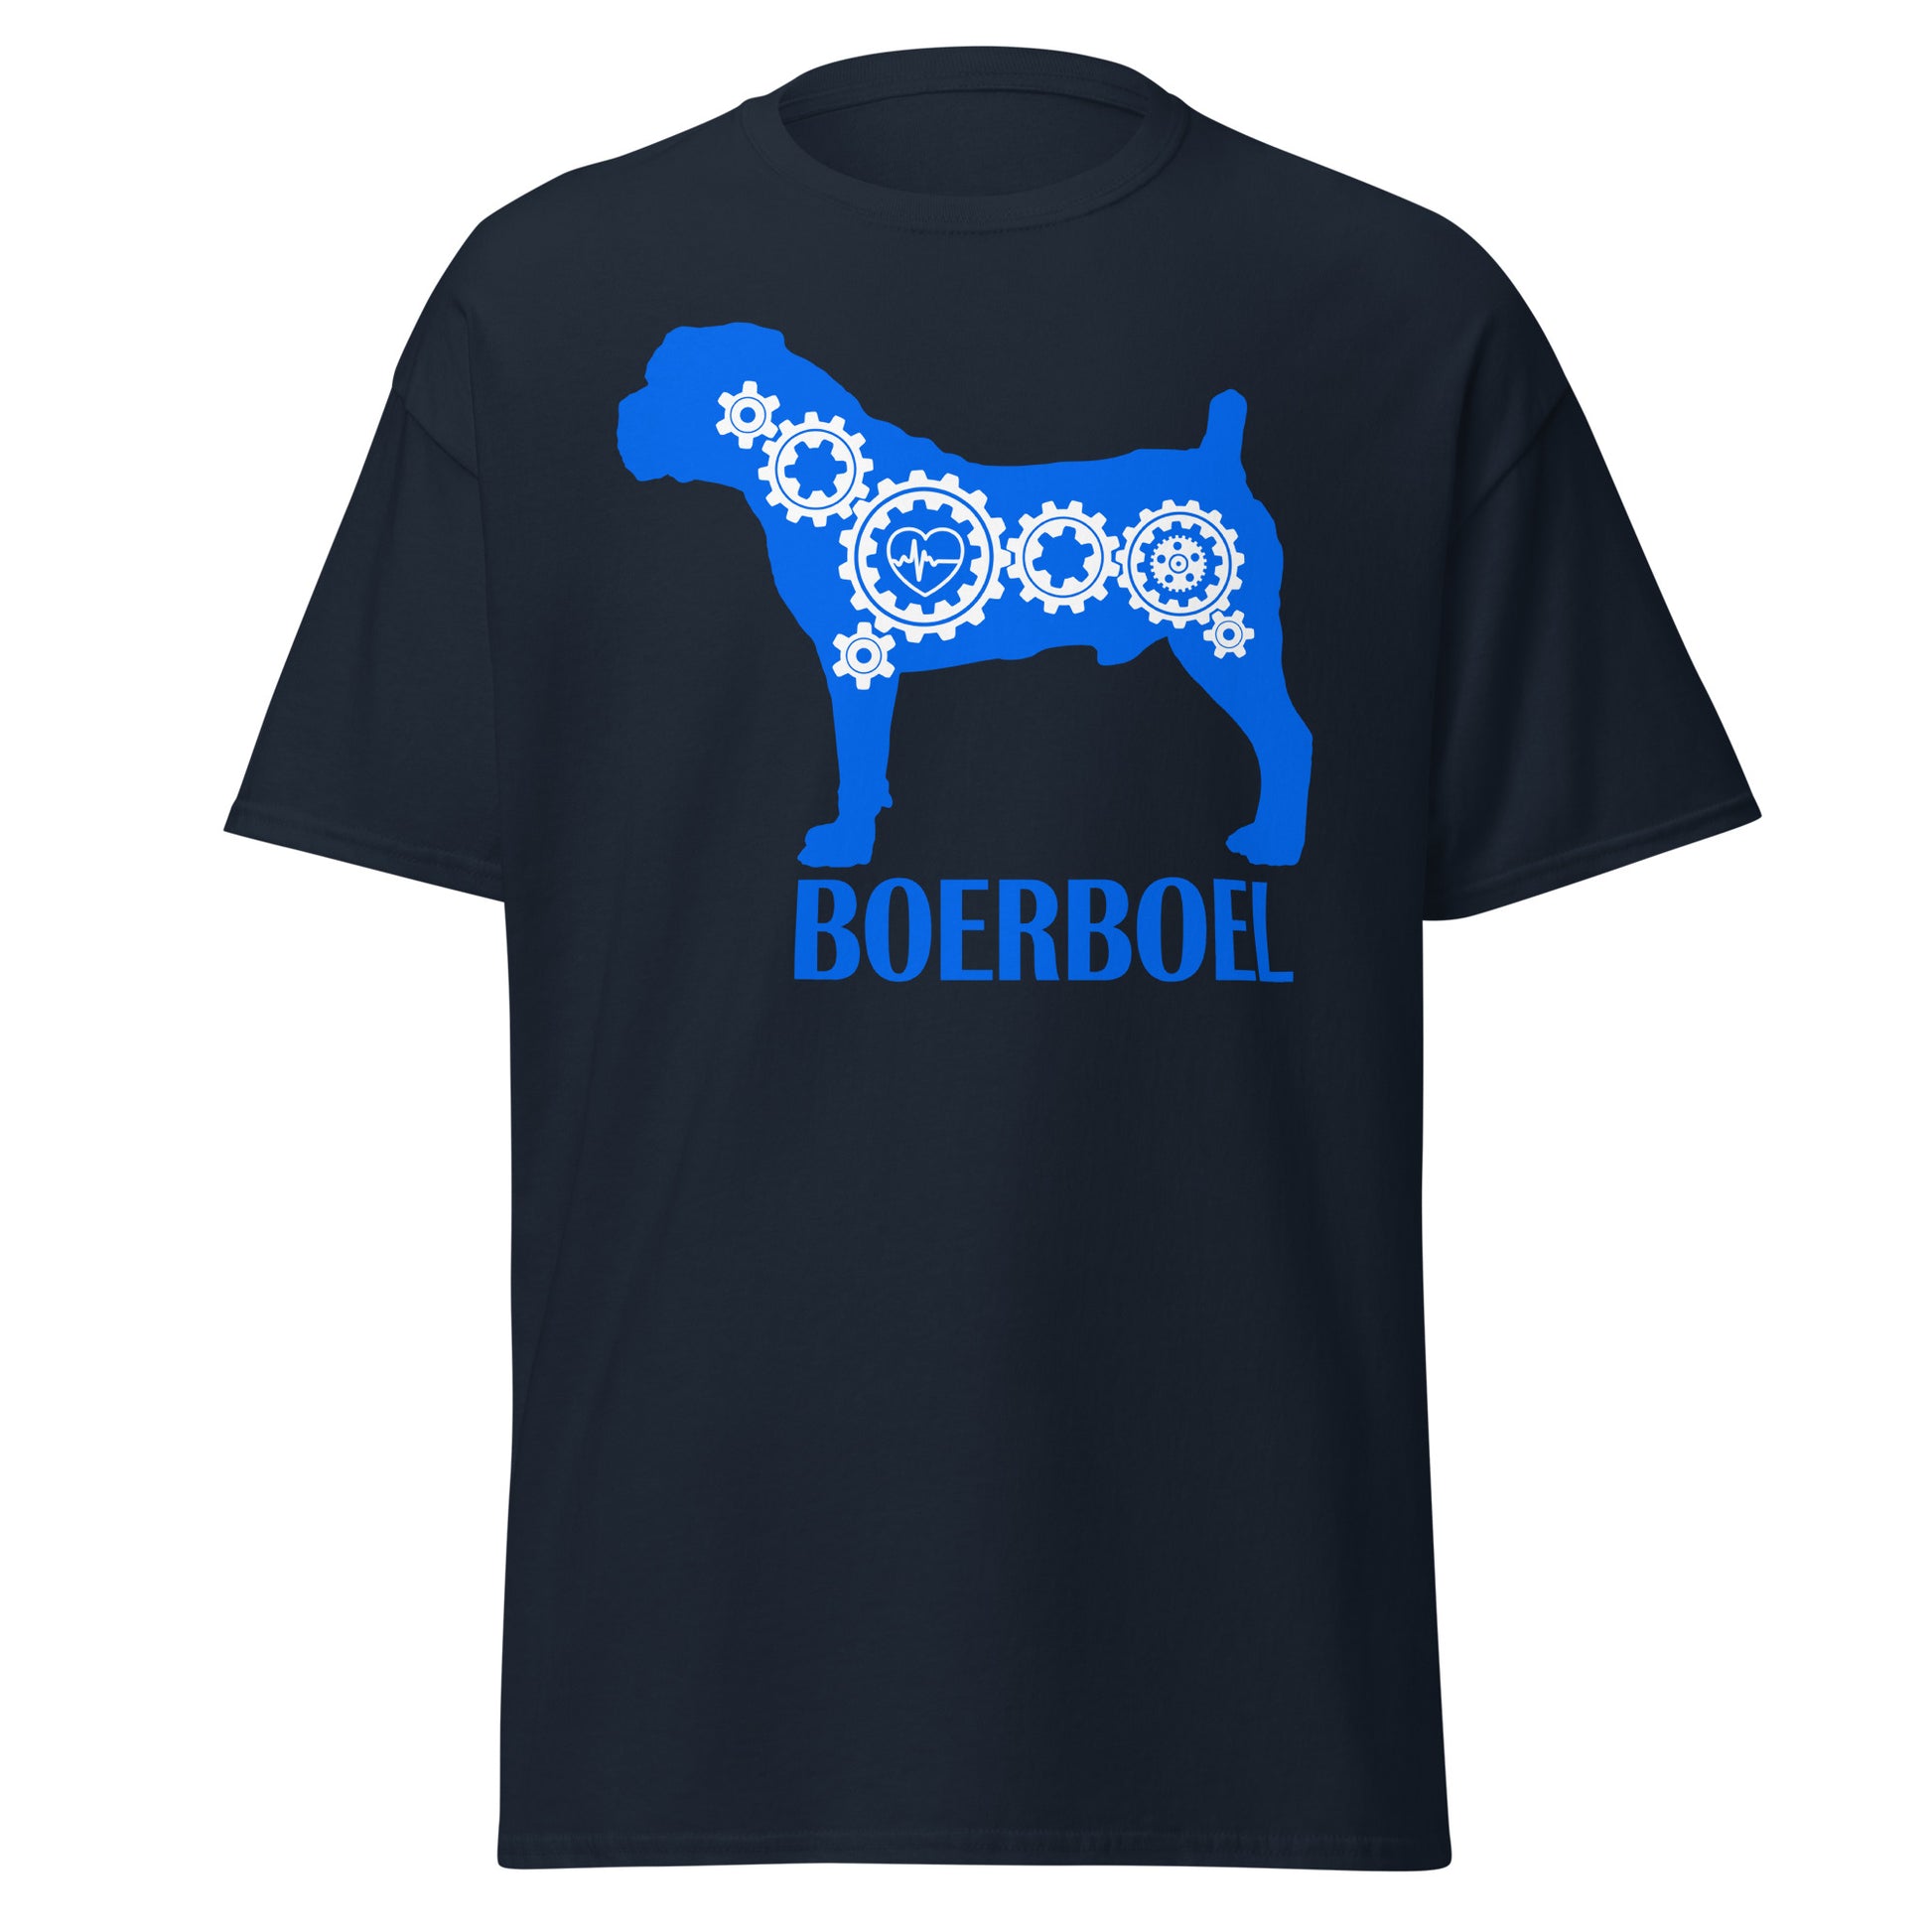 Boerboel Bionic men’s navy t-shirt by Dog Artistry.